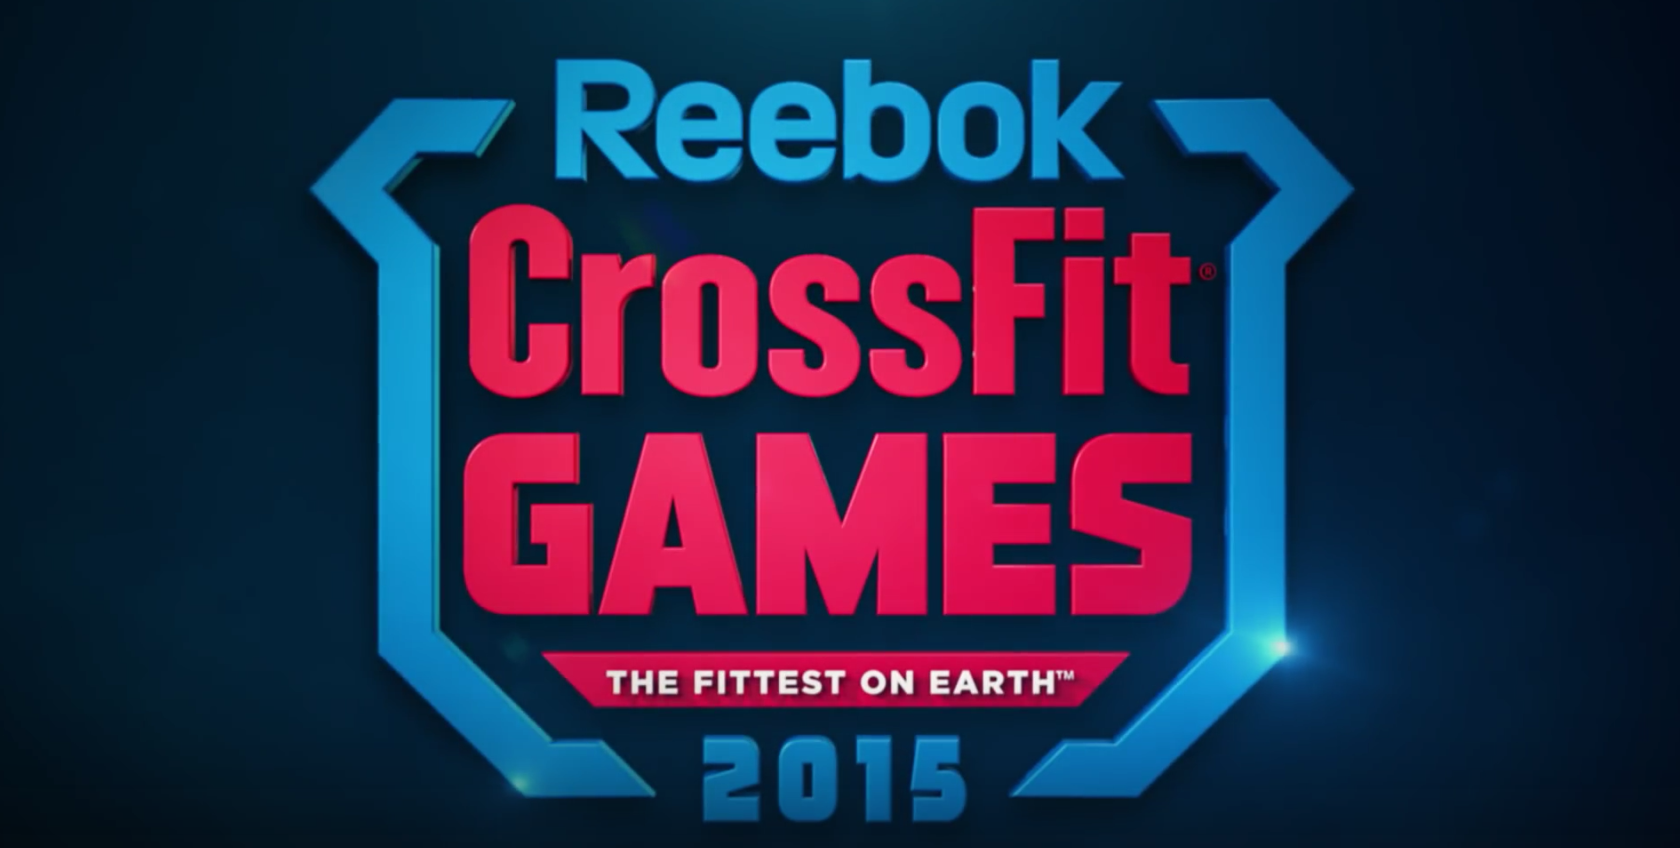 CrossFit Games Recap CrossFit turbocharged